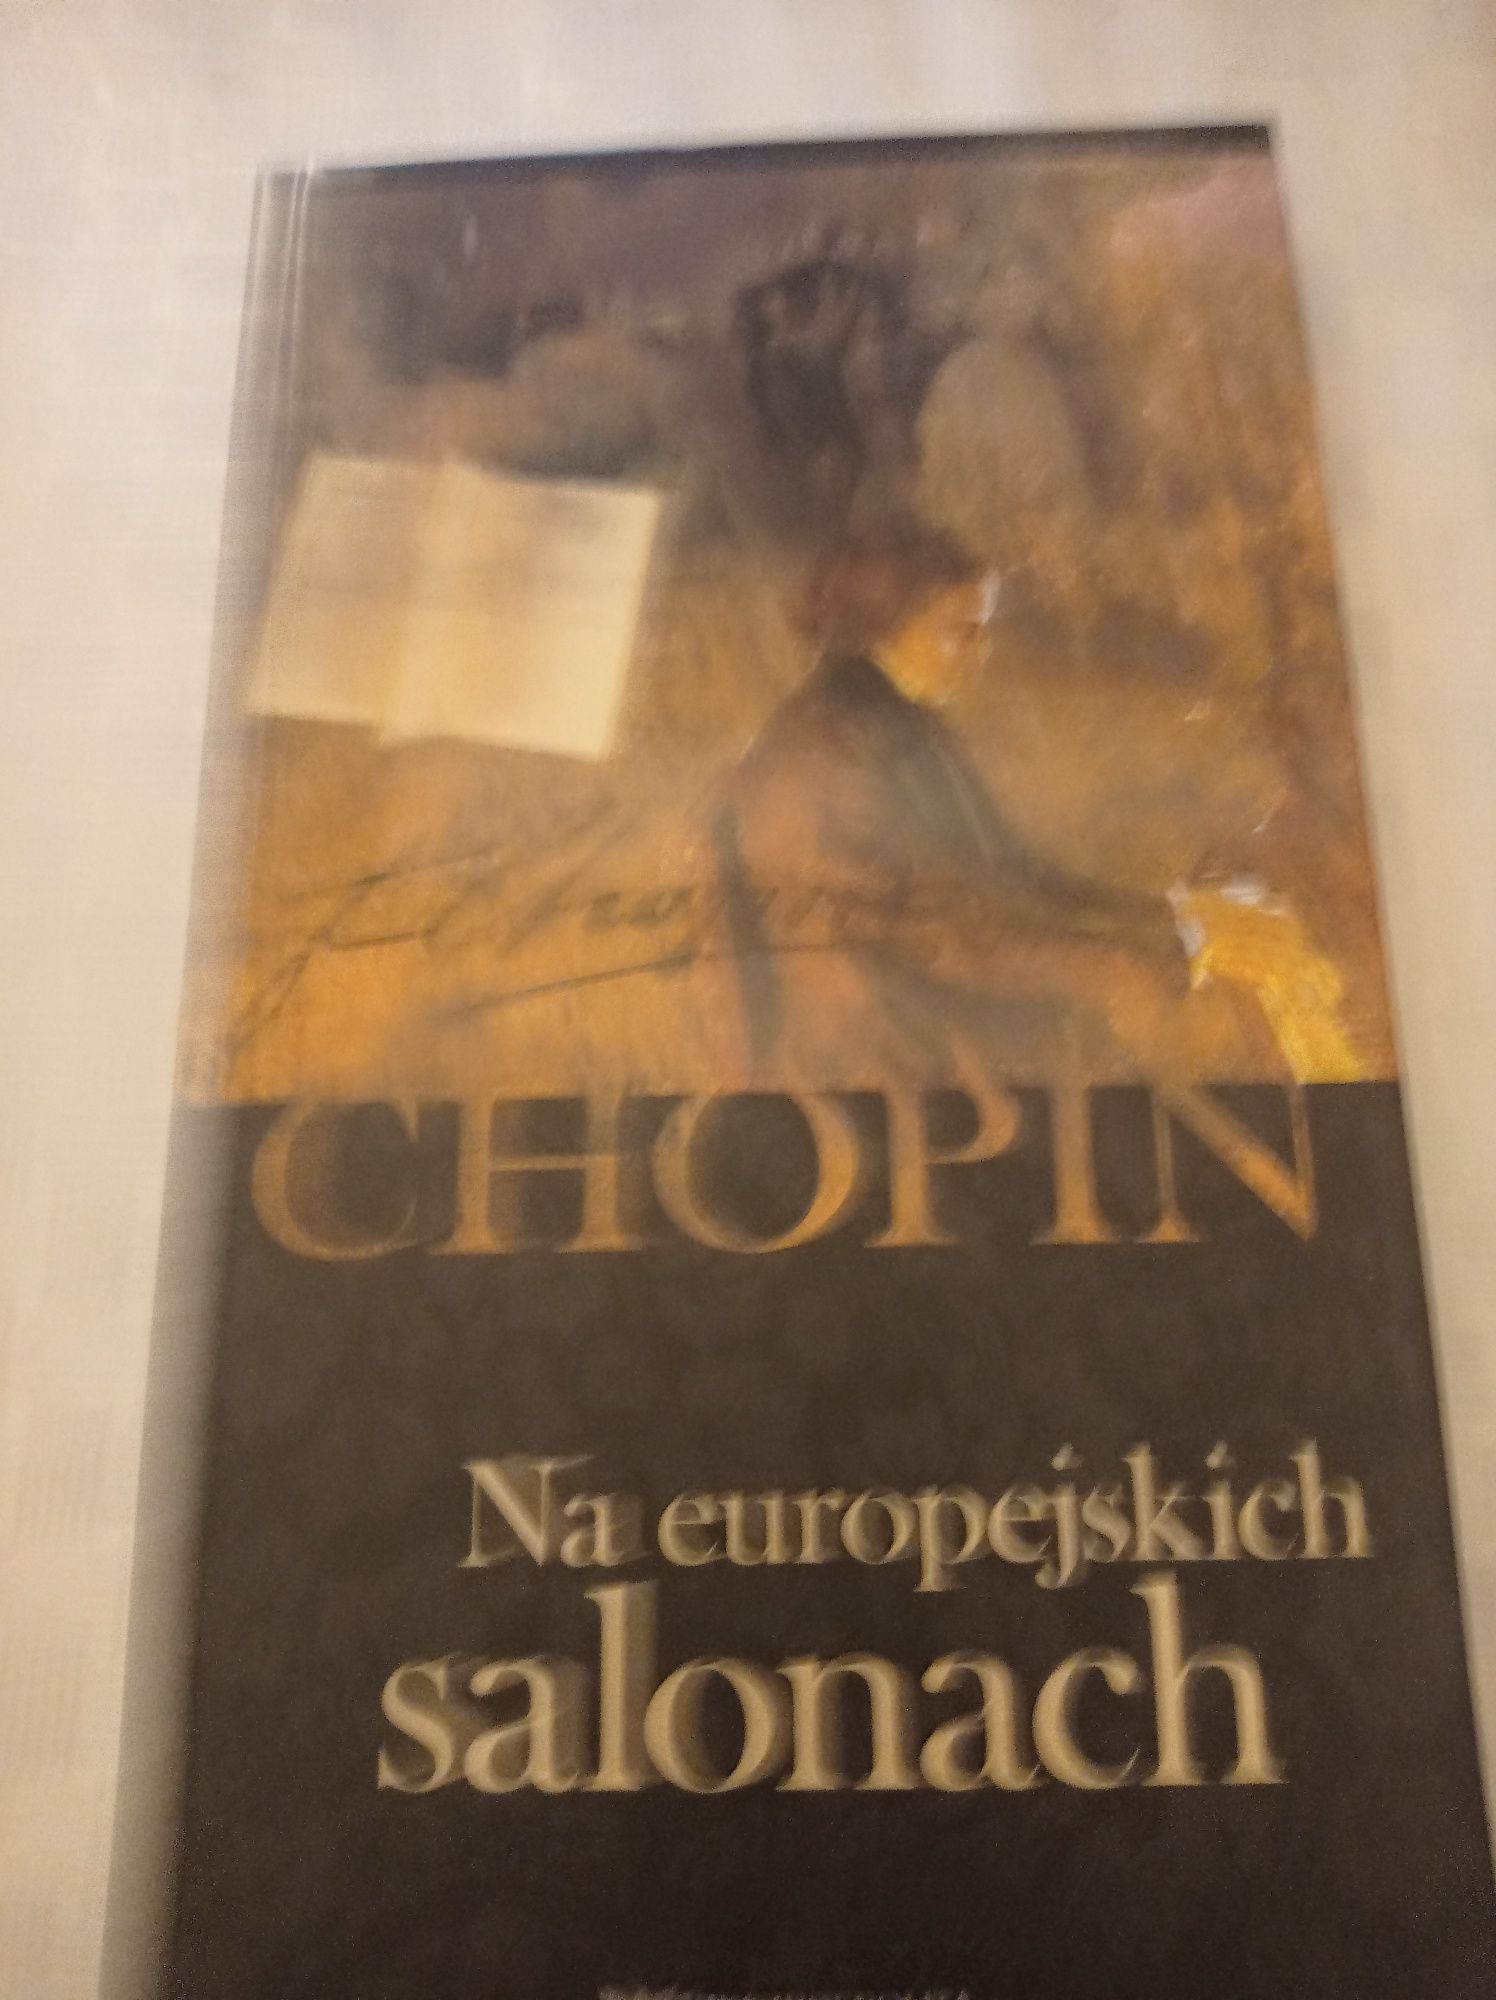 Na europejskich salonach - Chopin